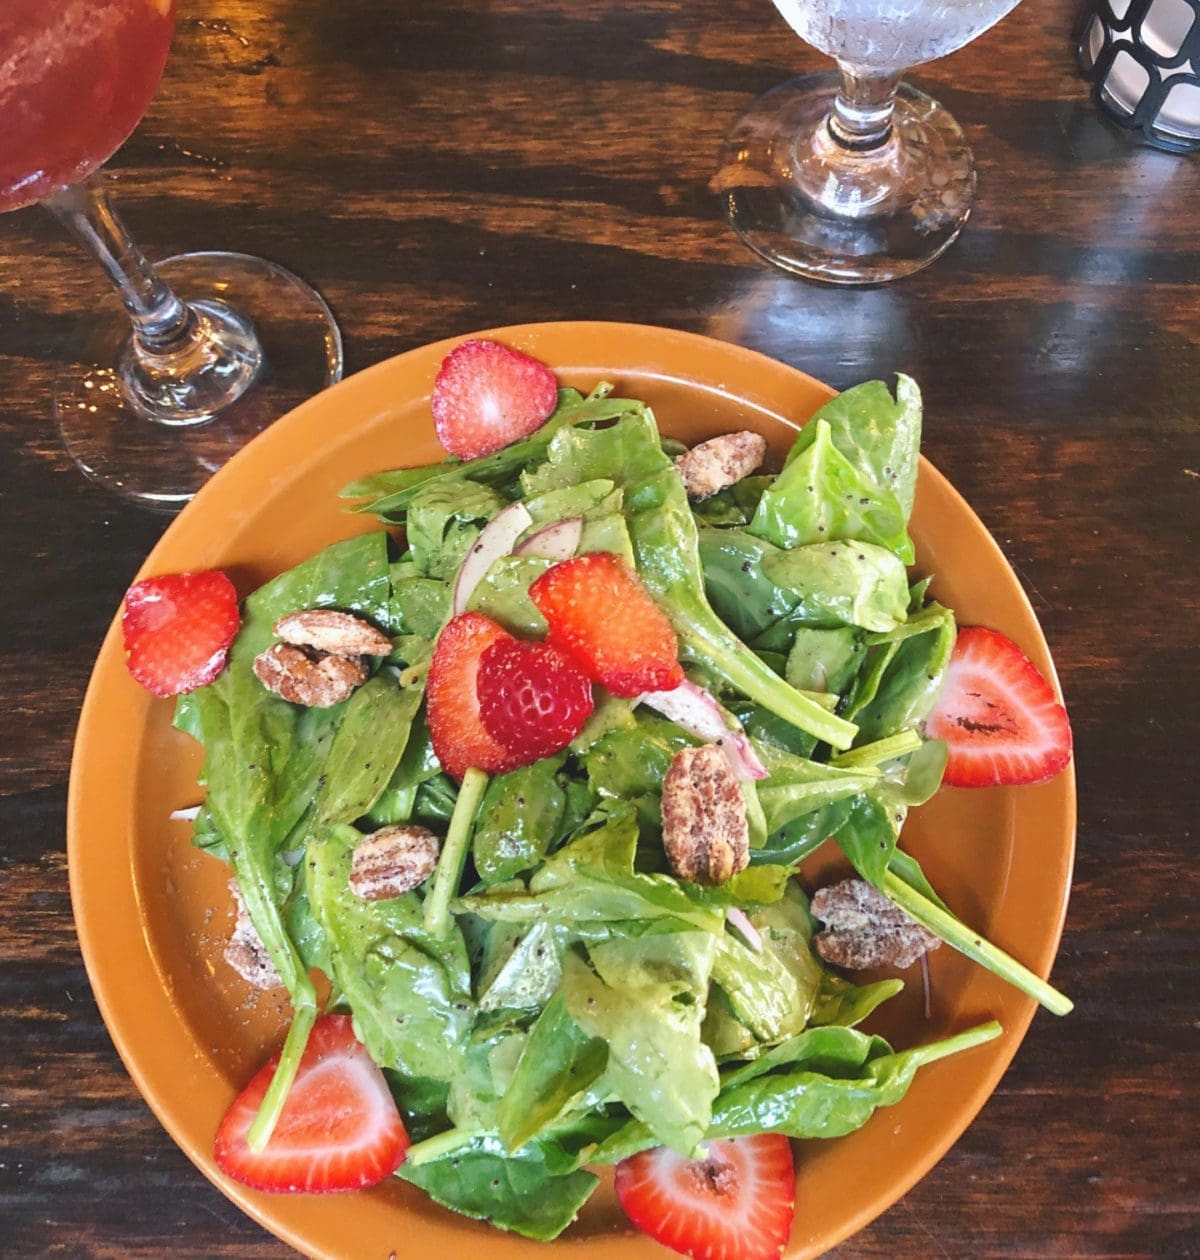 Salad from Santiago's Bodega in Orlando, Florida.